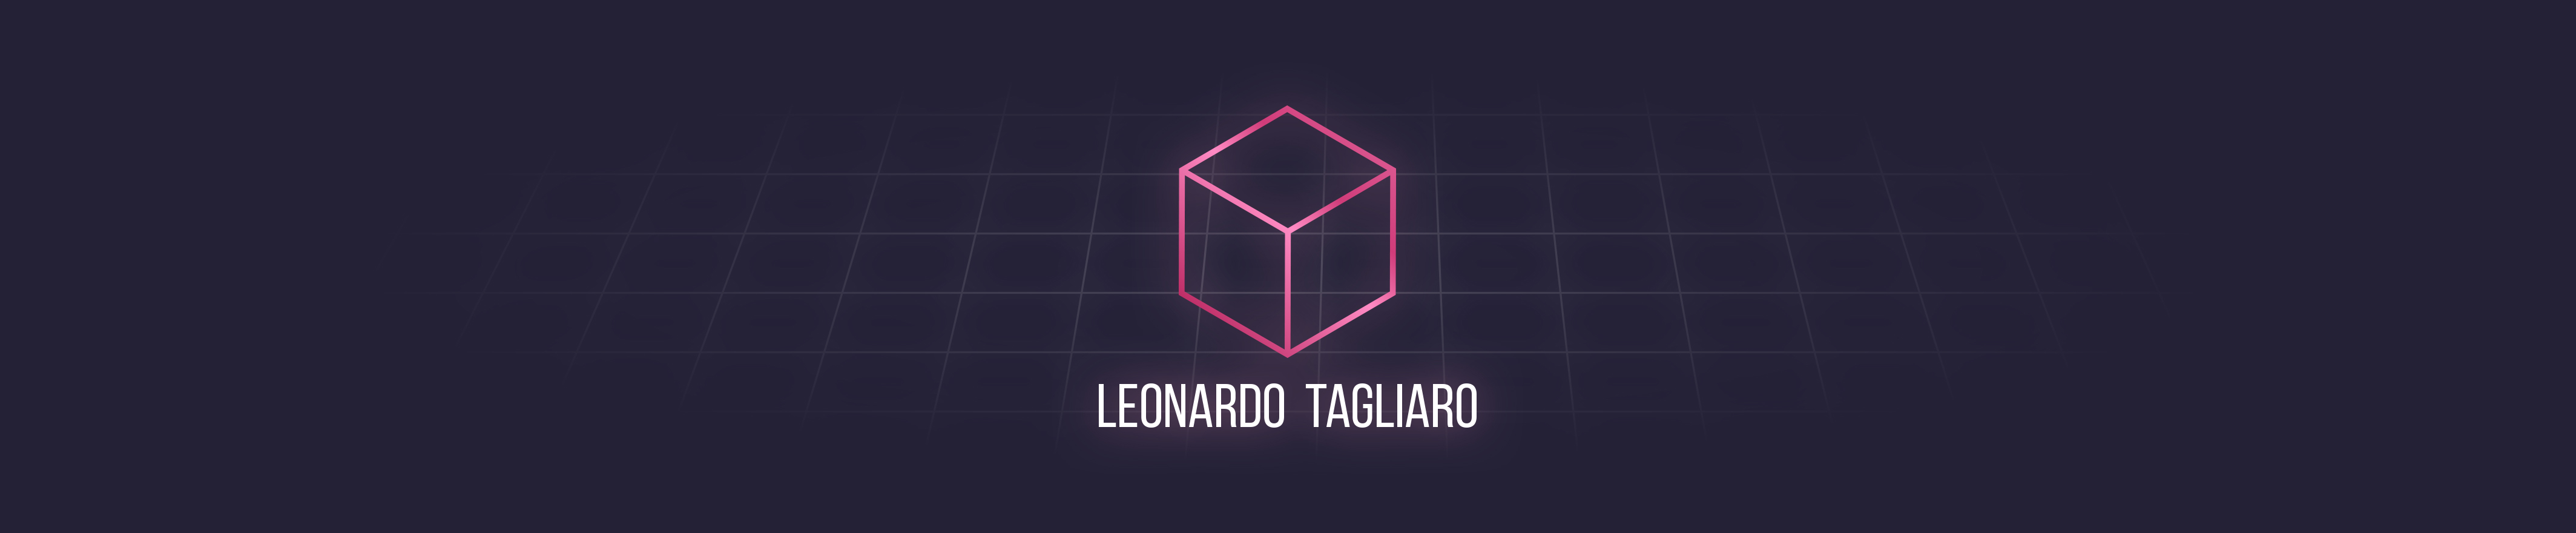 Leonardo Tagliaro - itch.io